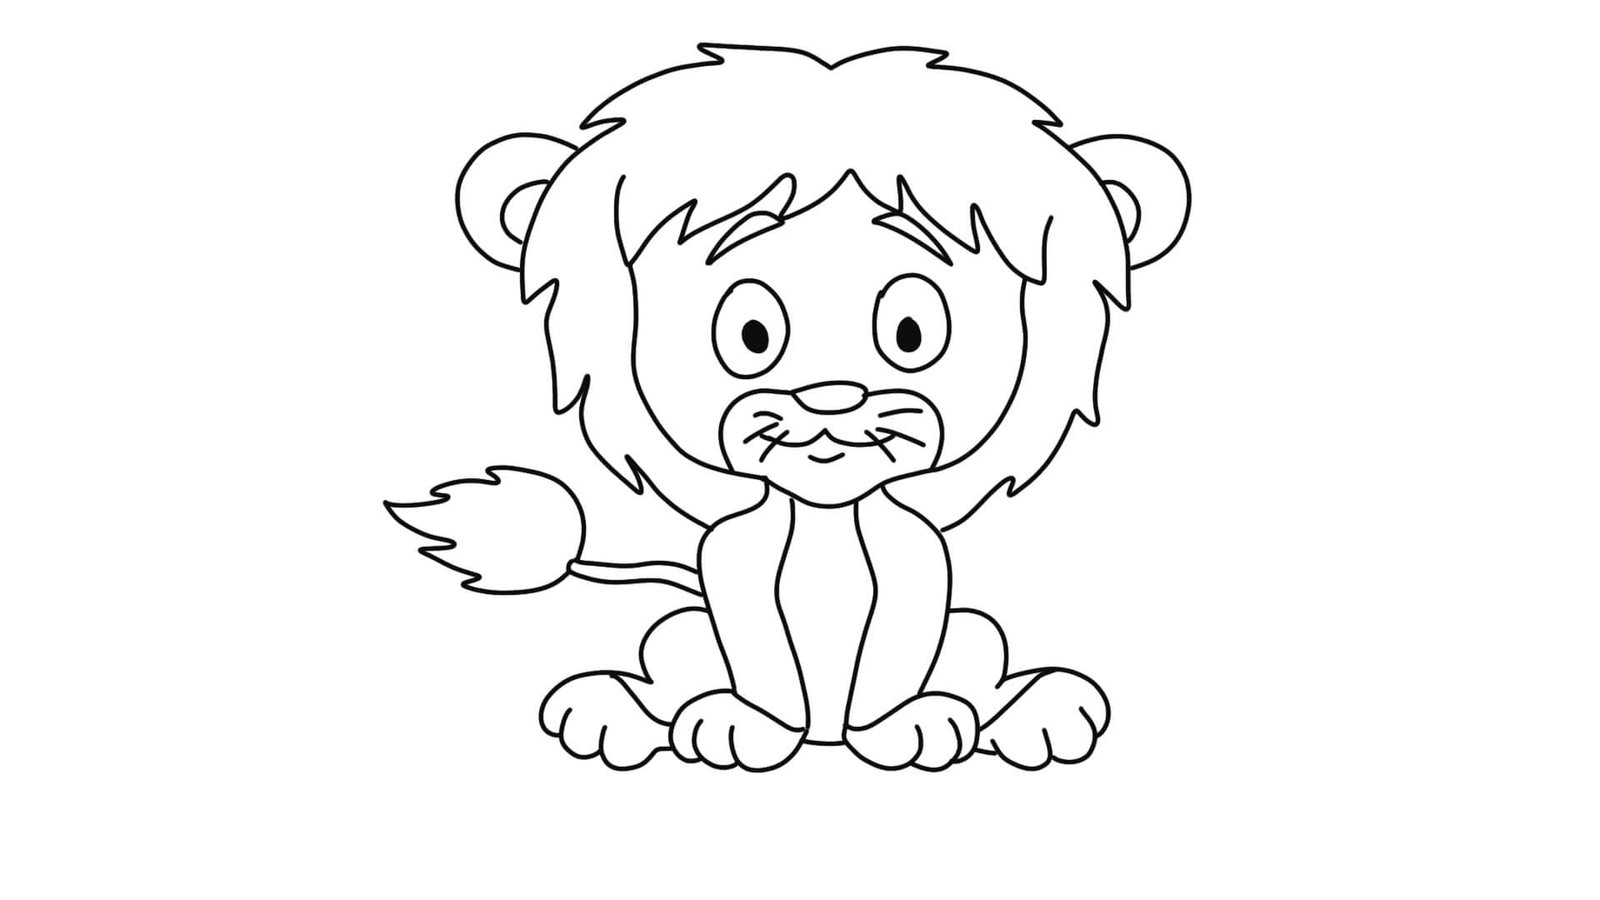 Lion Coloring Sheet